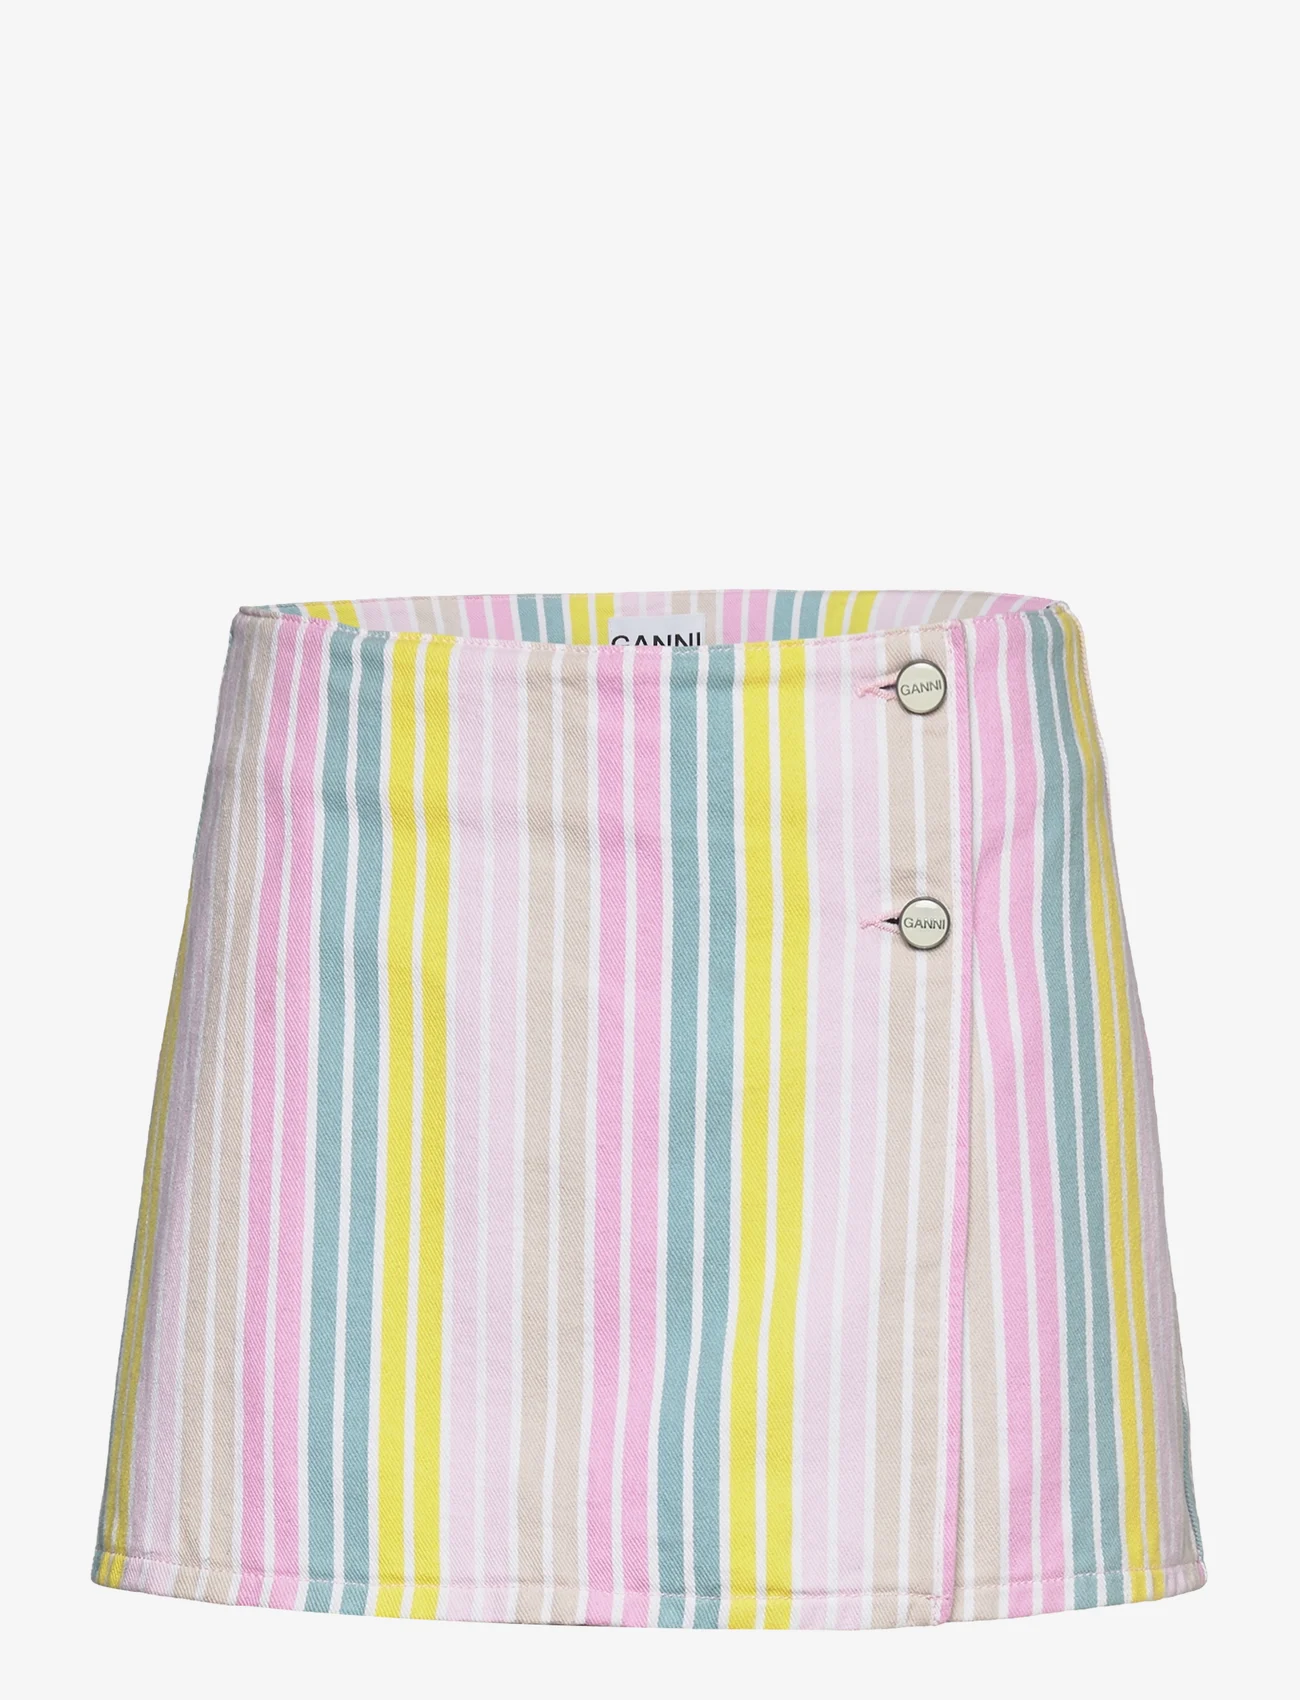 Ganni - Stripe Denim - korte nederdele - multicolour - 0